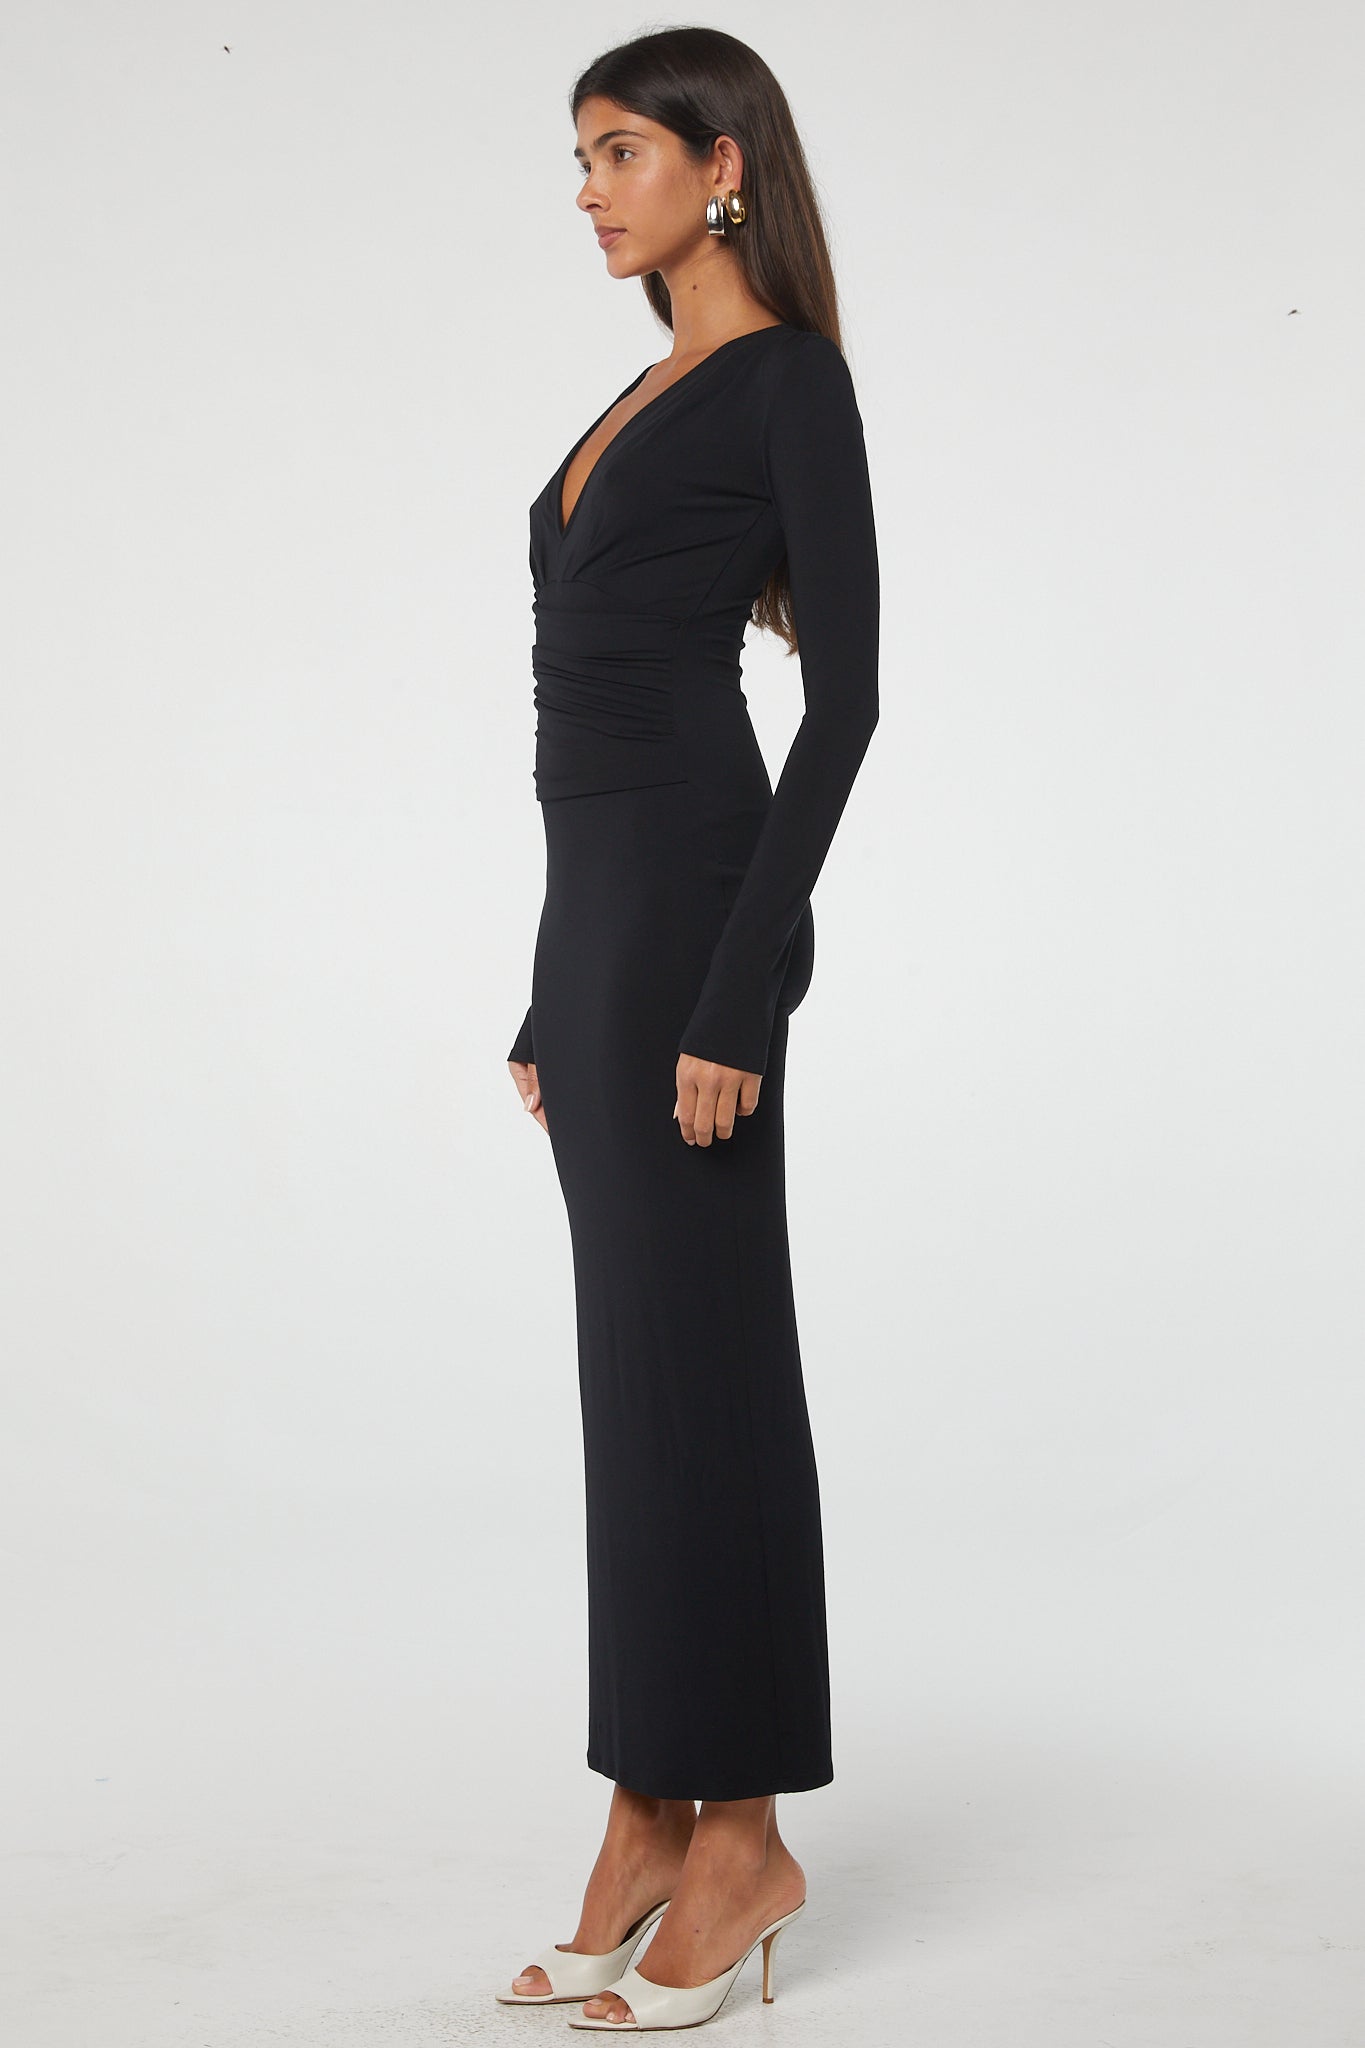 Calli Dress - Black | The Line by K